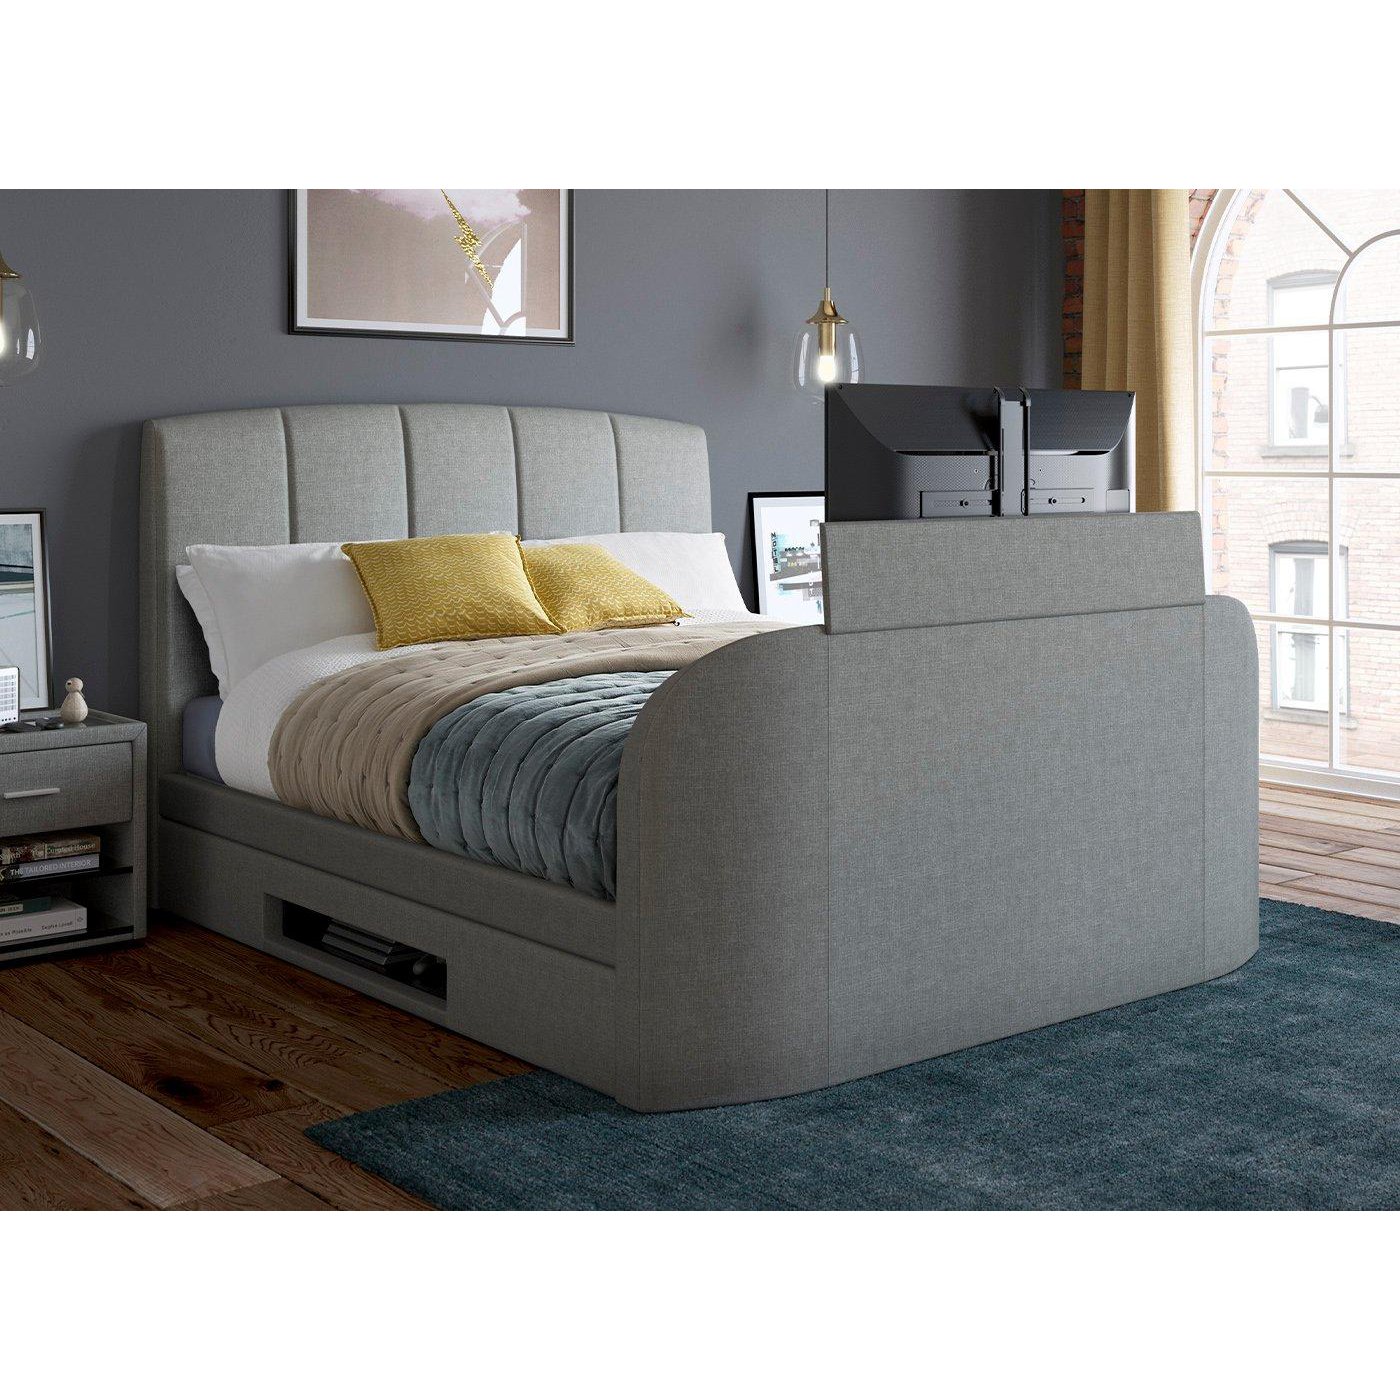 Seoul Sleepmotion Adjustable TV Bed Frame - 4'6 Double - Grey